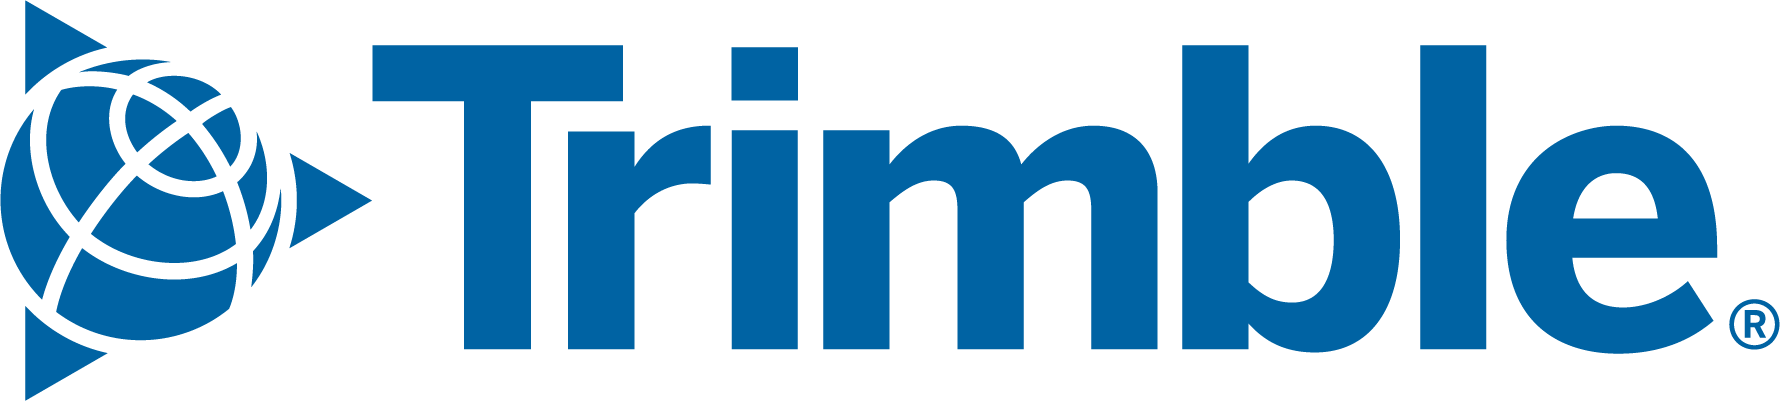 Trimble Solutions Sea Pte. Ltd. logo